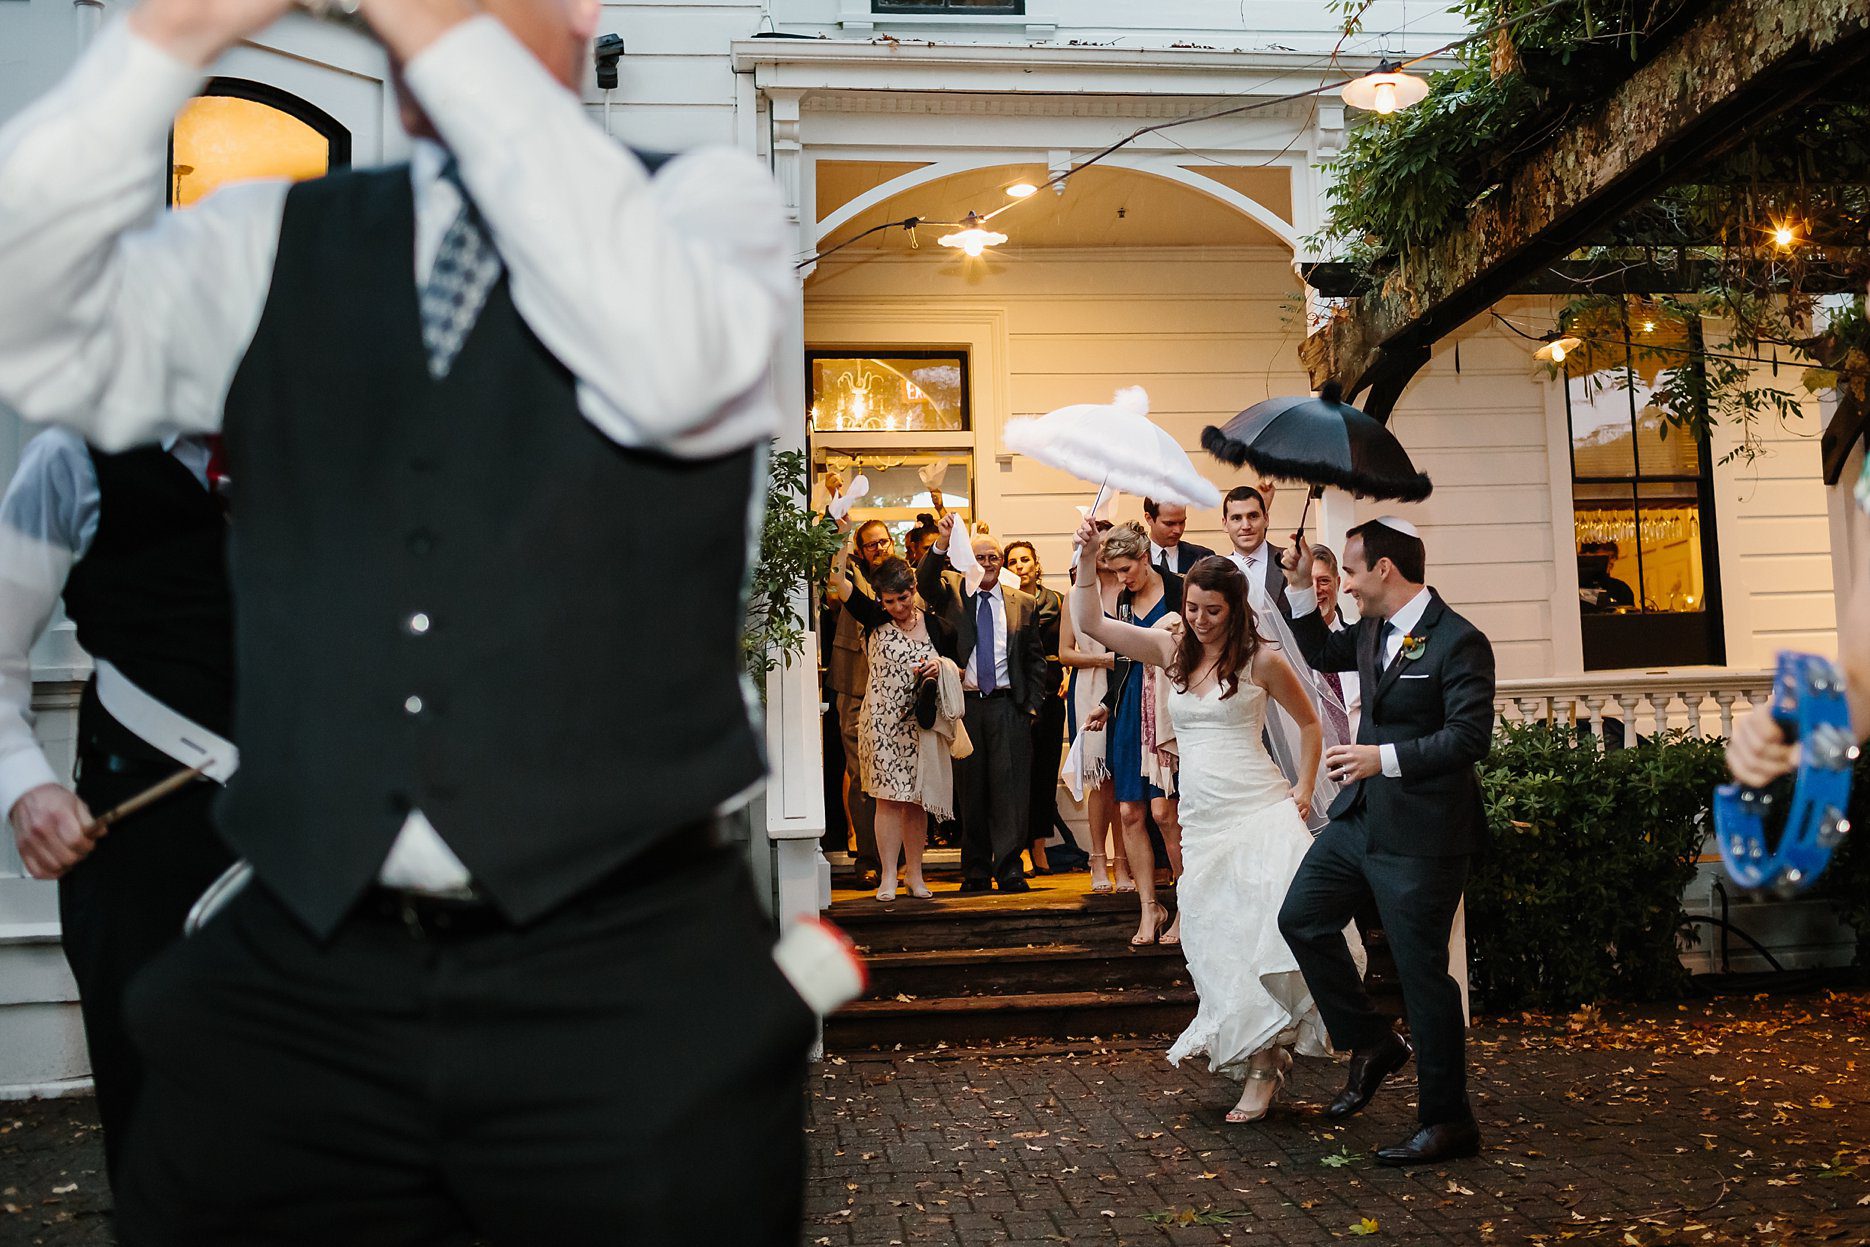 Second Line, Creole Wedding, Jewish Wedding, Ramekins Sonoma, Bride and Groom, Cosmo Alley Cats, Lauren Miller Events, Sonoma Wedding Photographer